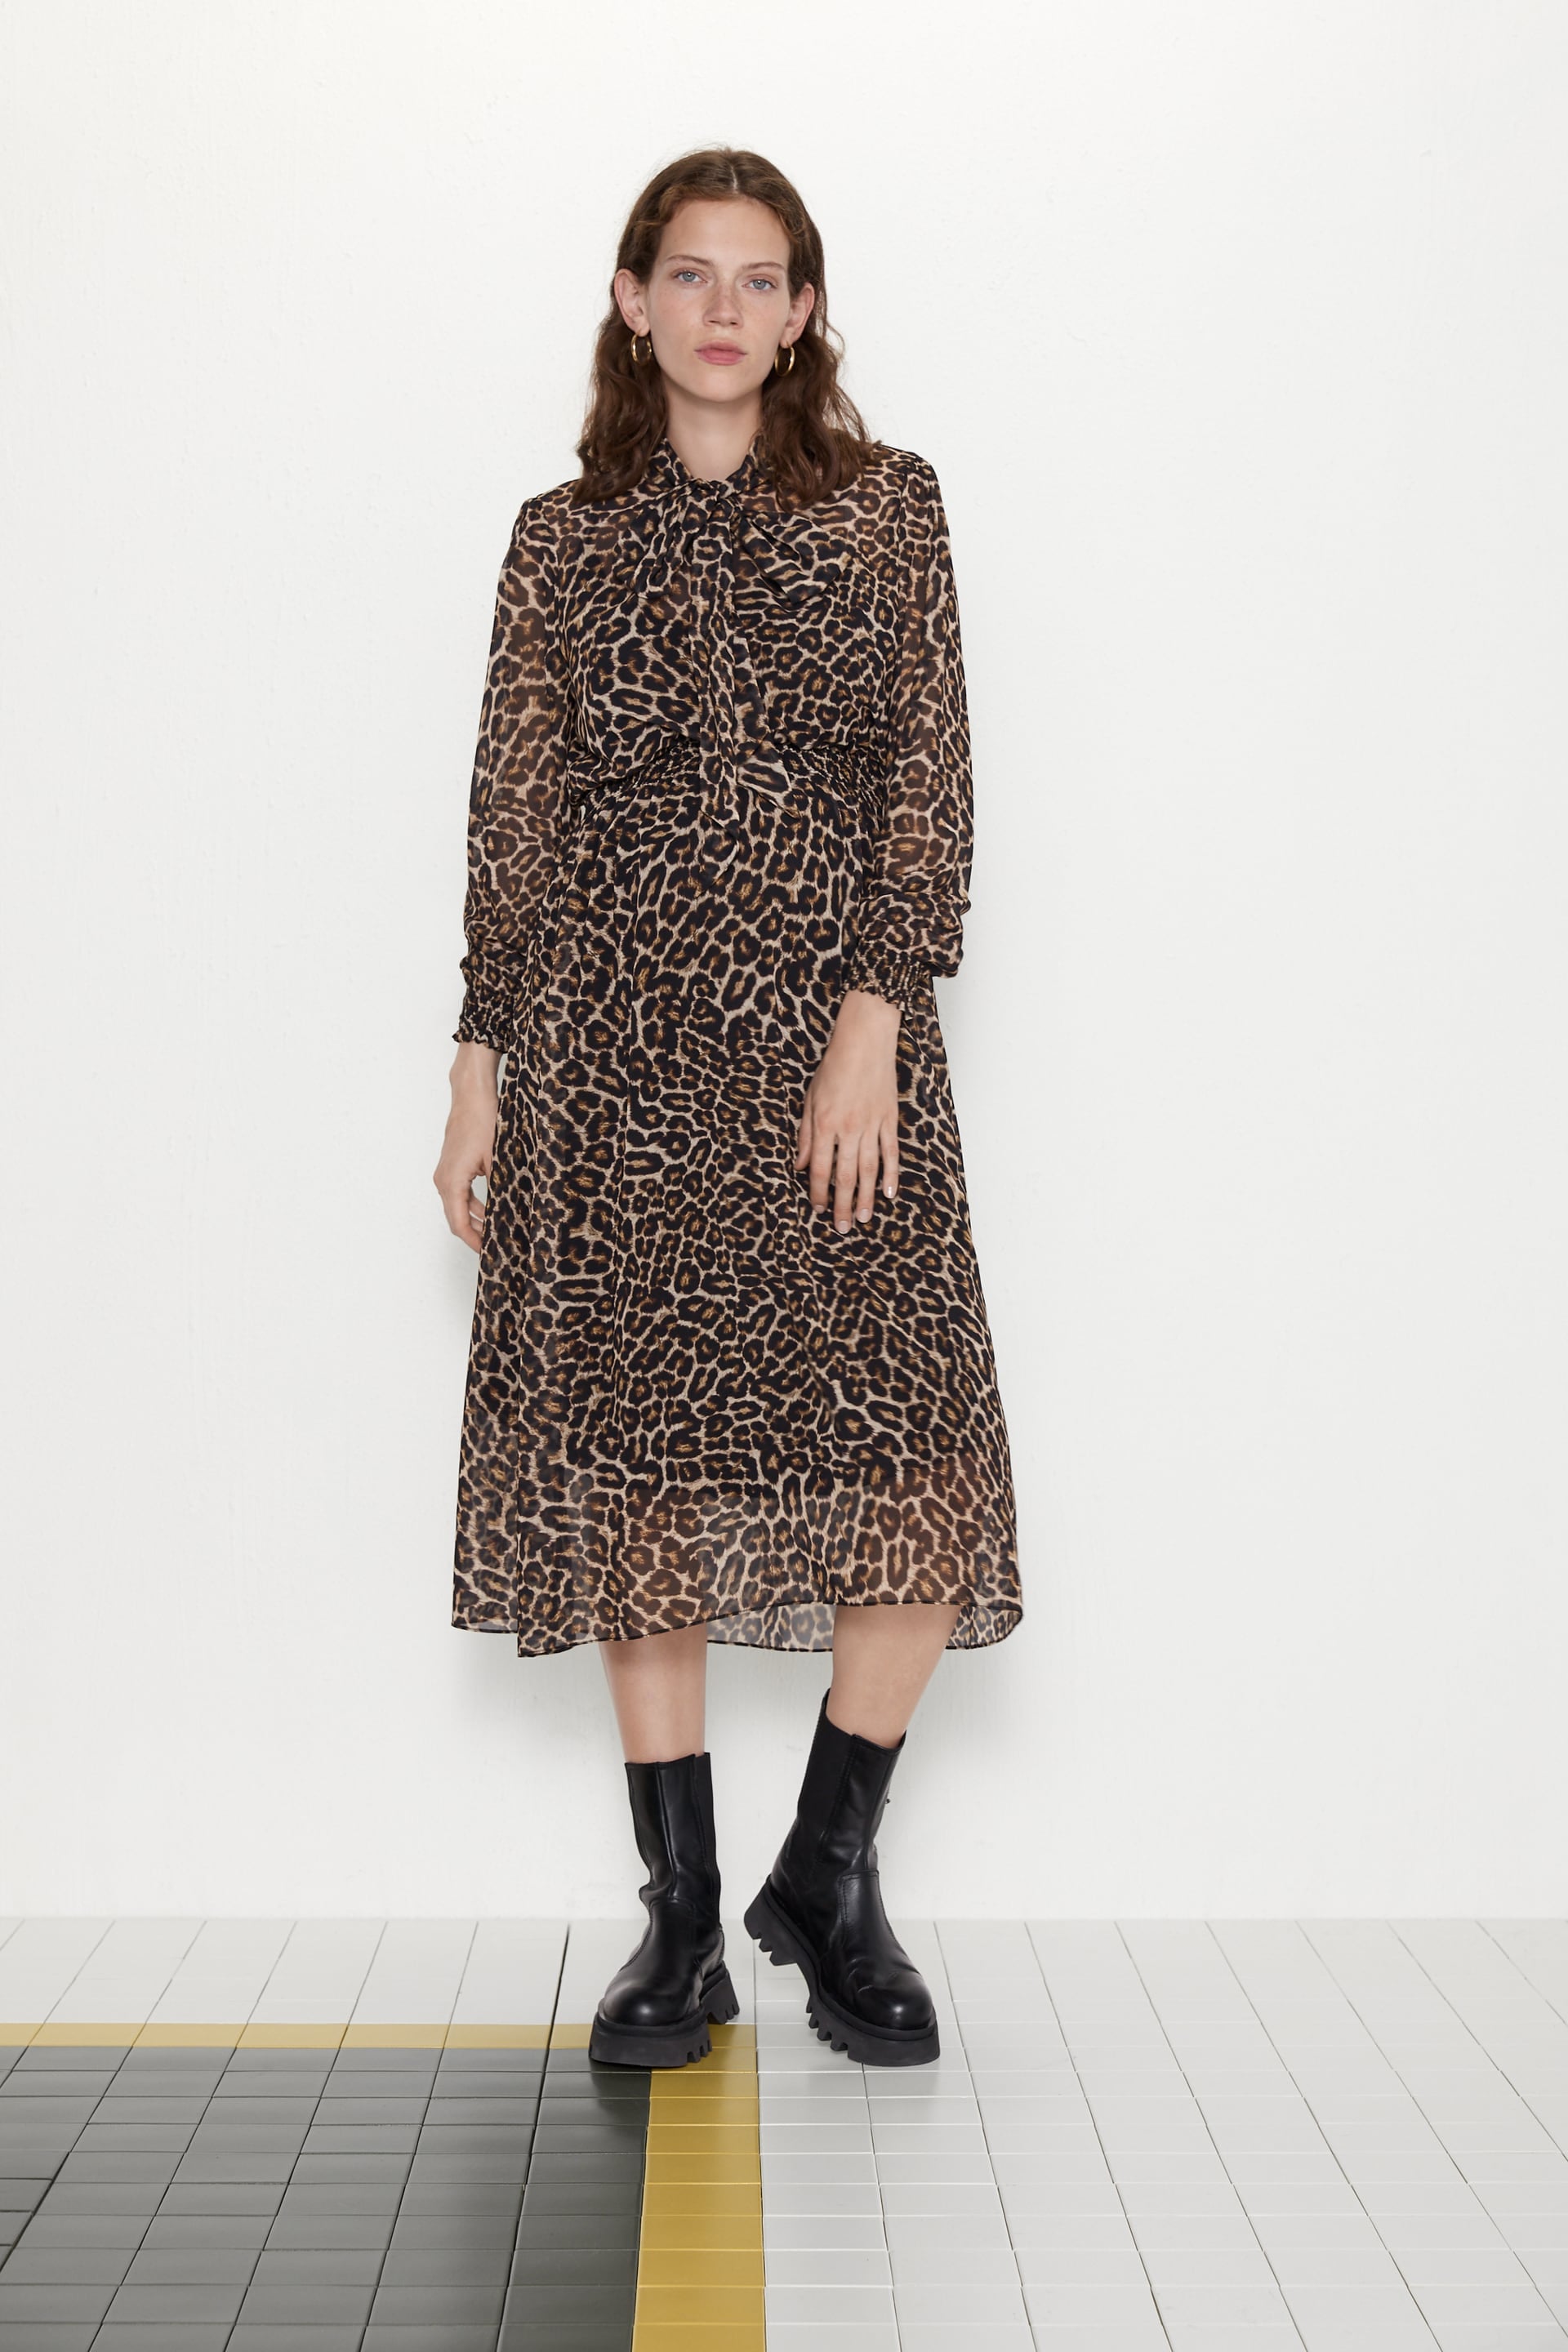 long leopard print dress zara